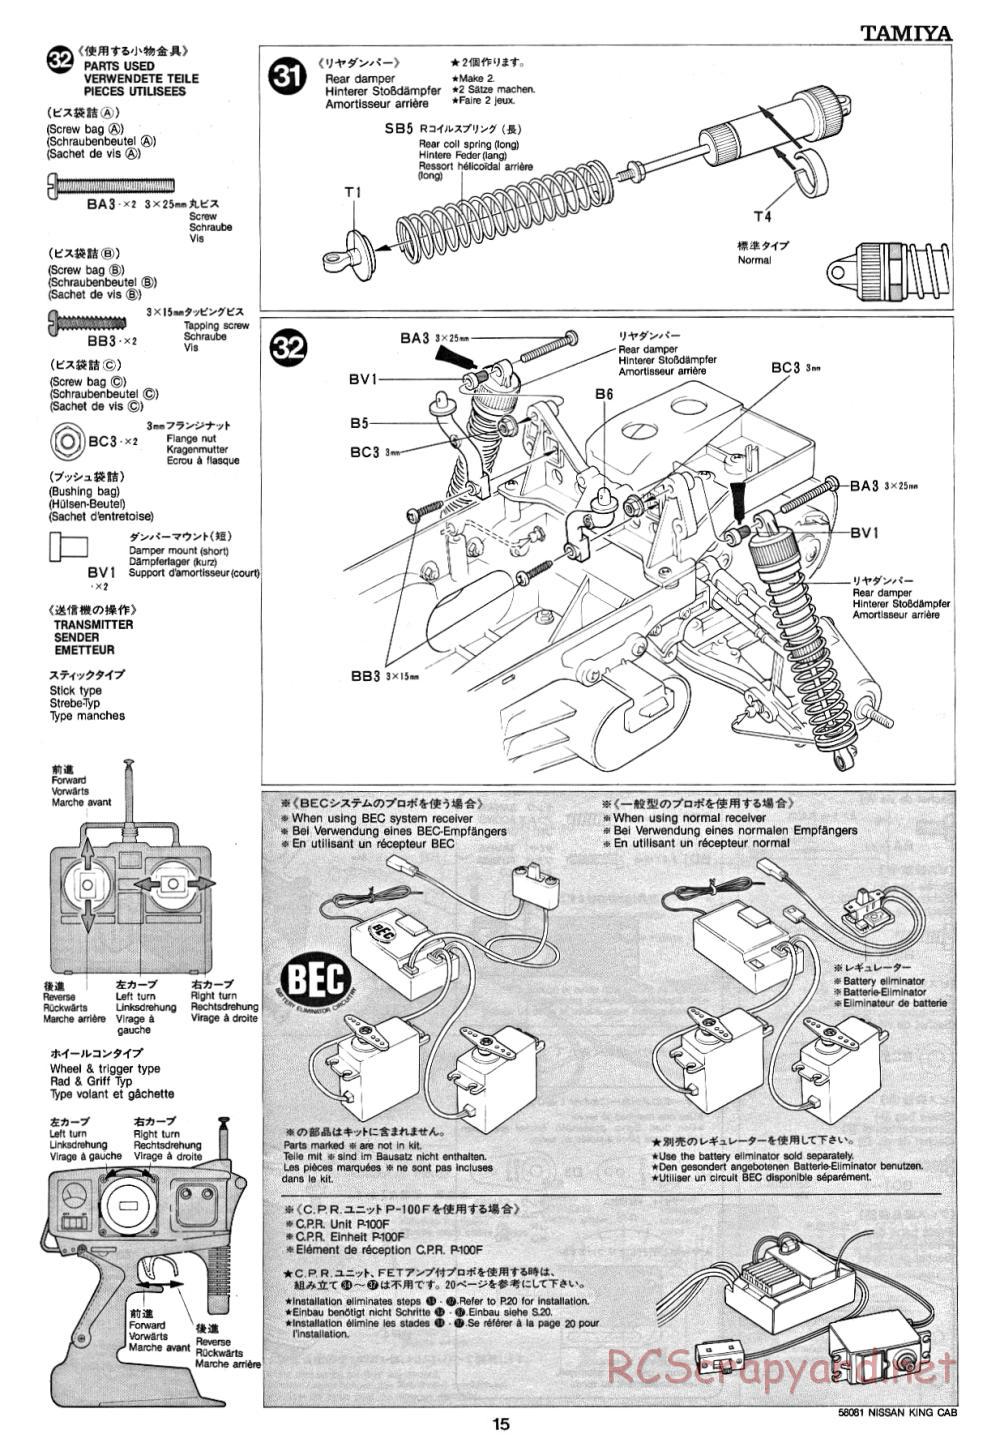 Tamiya - Nissan King Cab - 58081 - Manual - Page 15